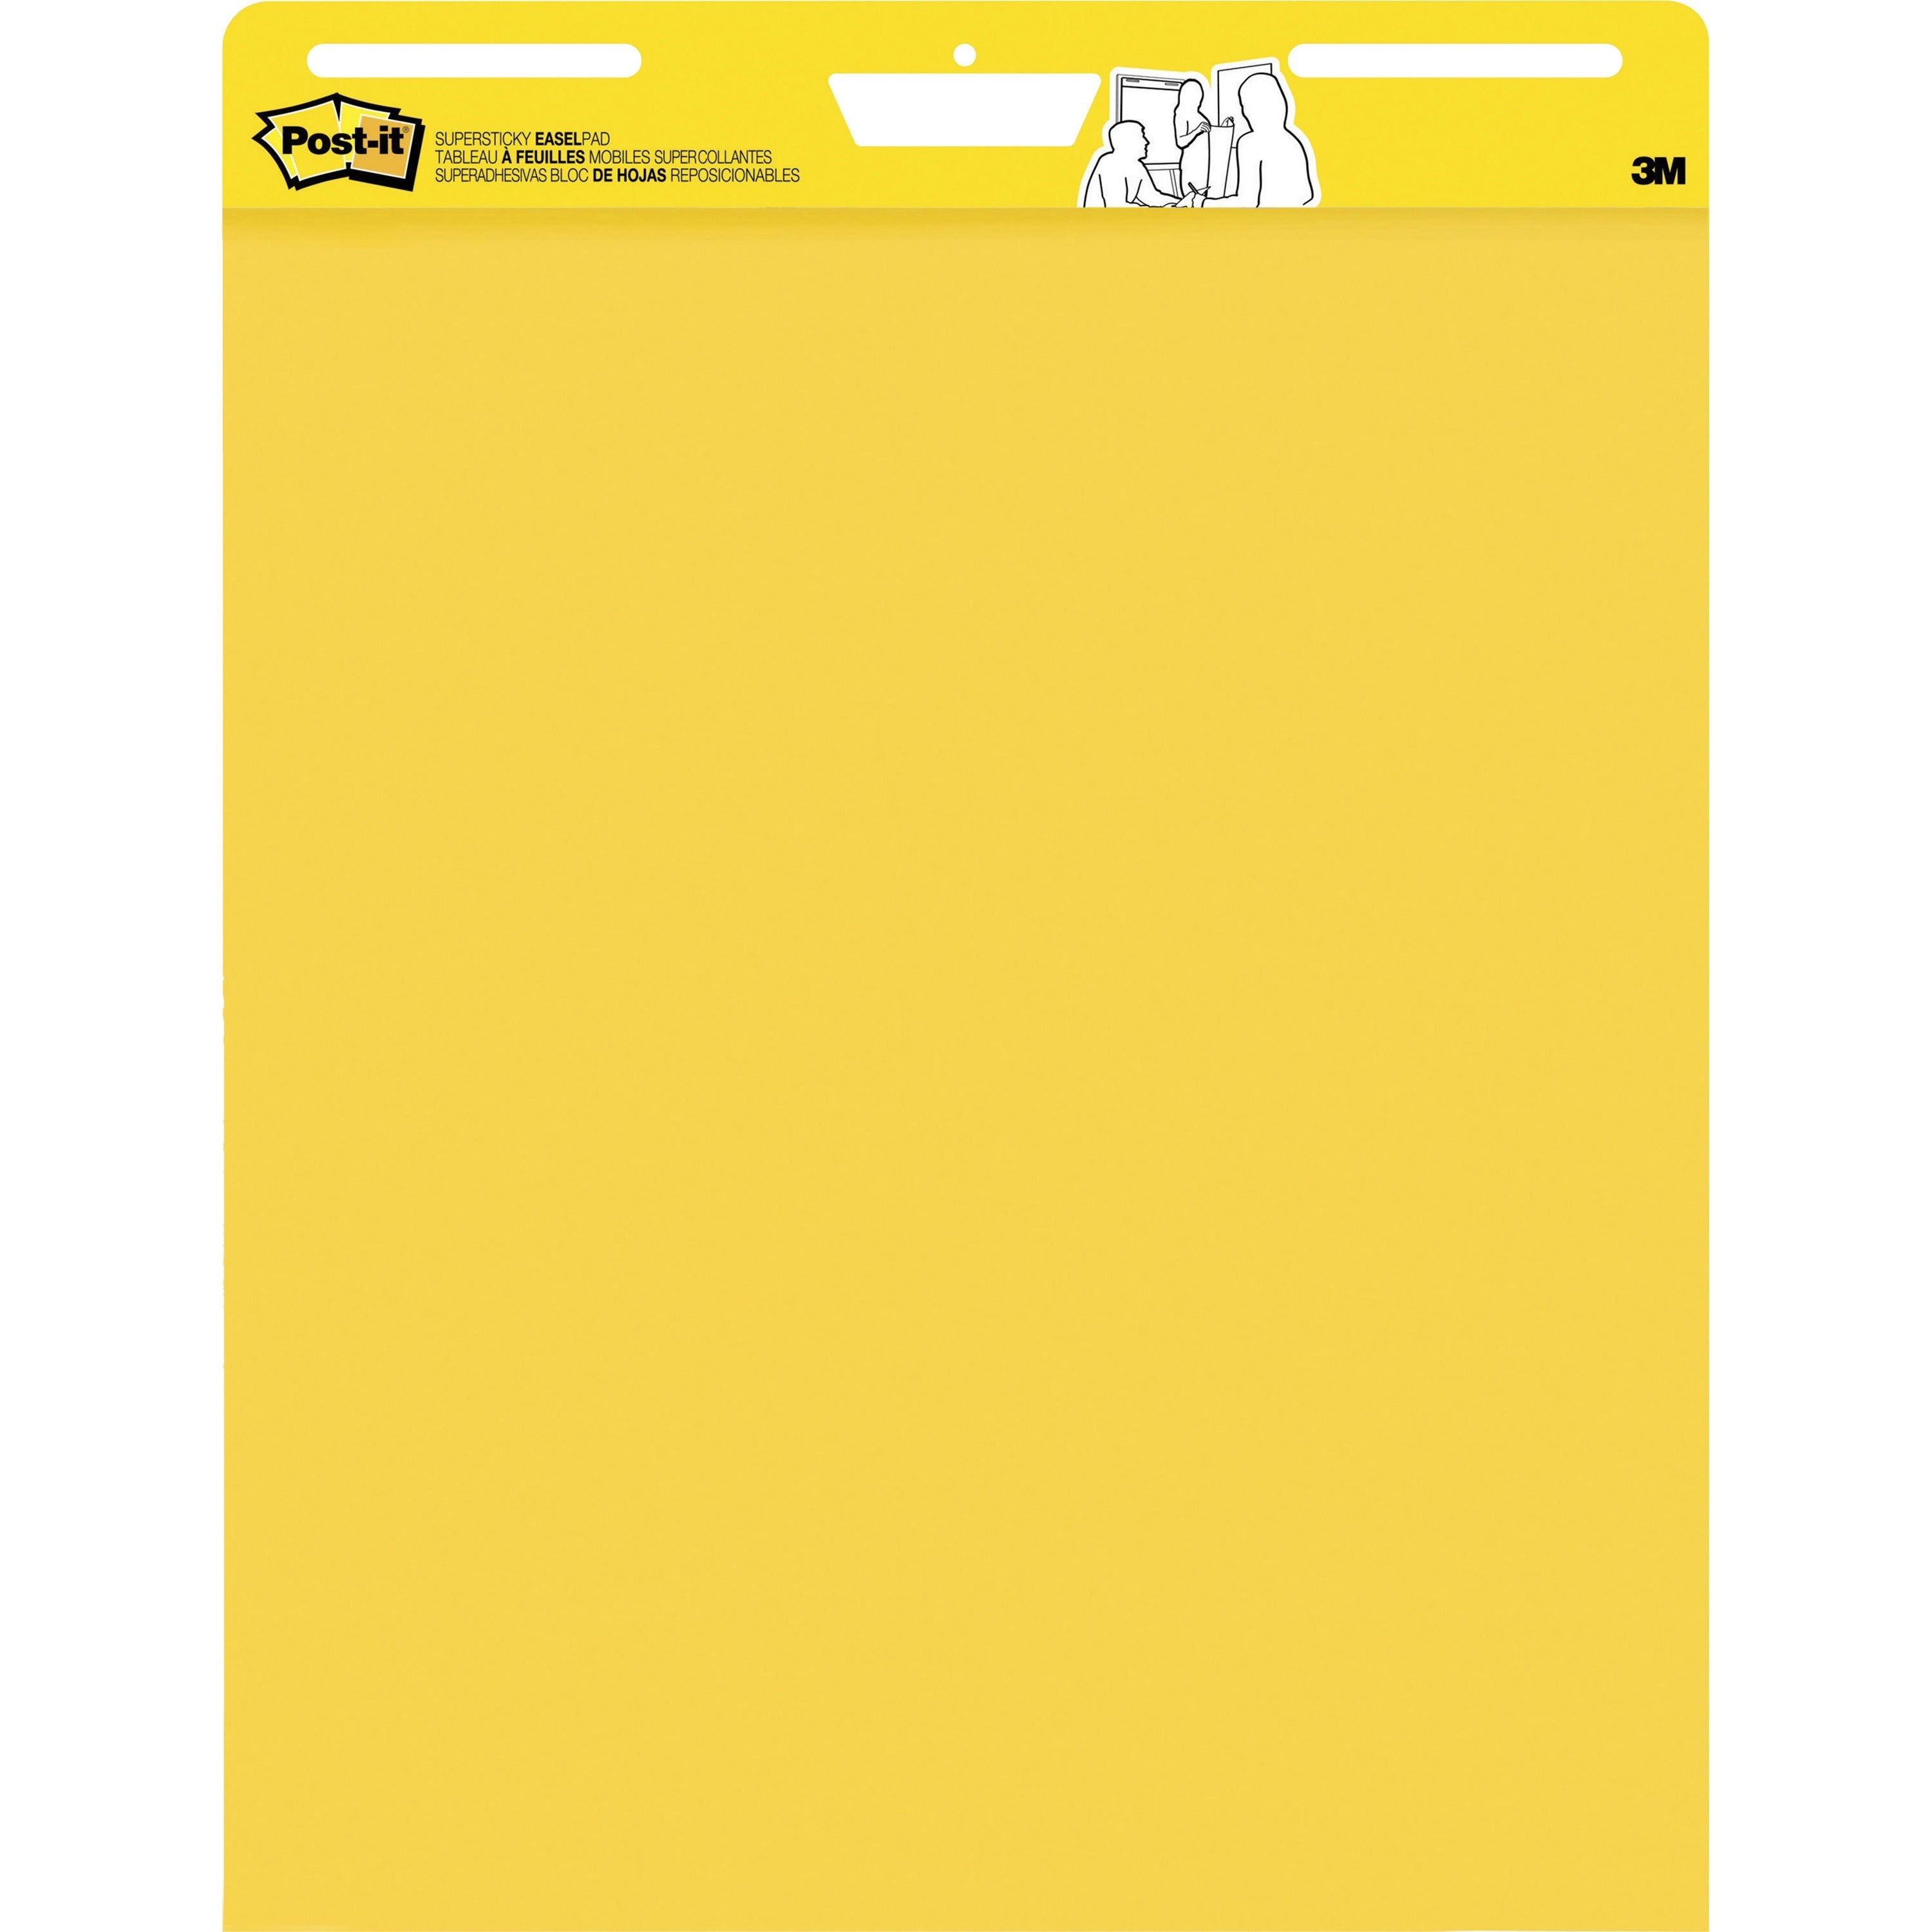 3M Post-it Yellow Easel Pad 559YWSS, 25X30" - 3M, _MS, PRESENTATION